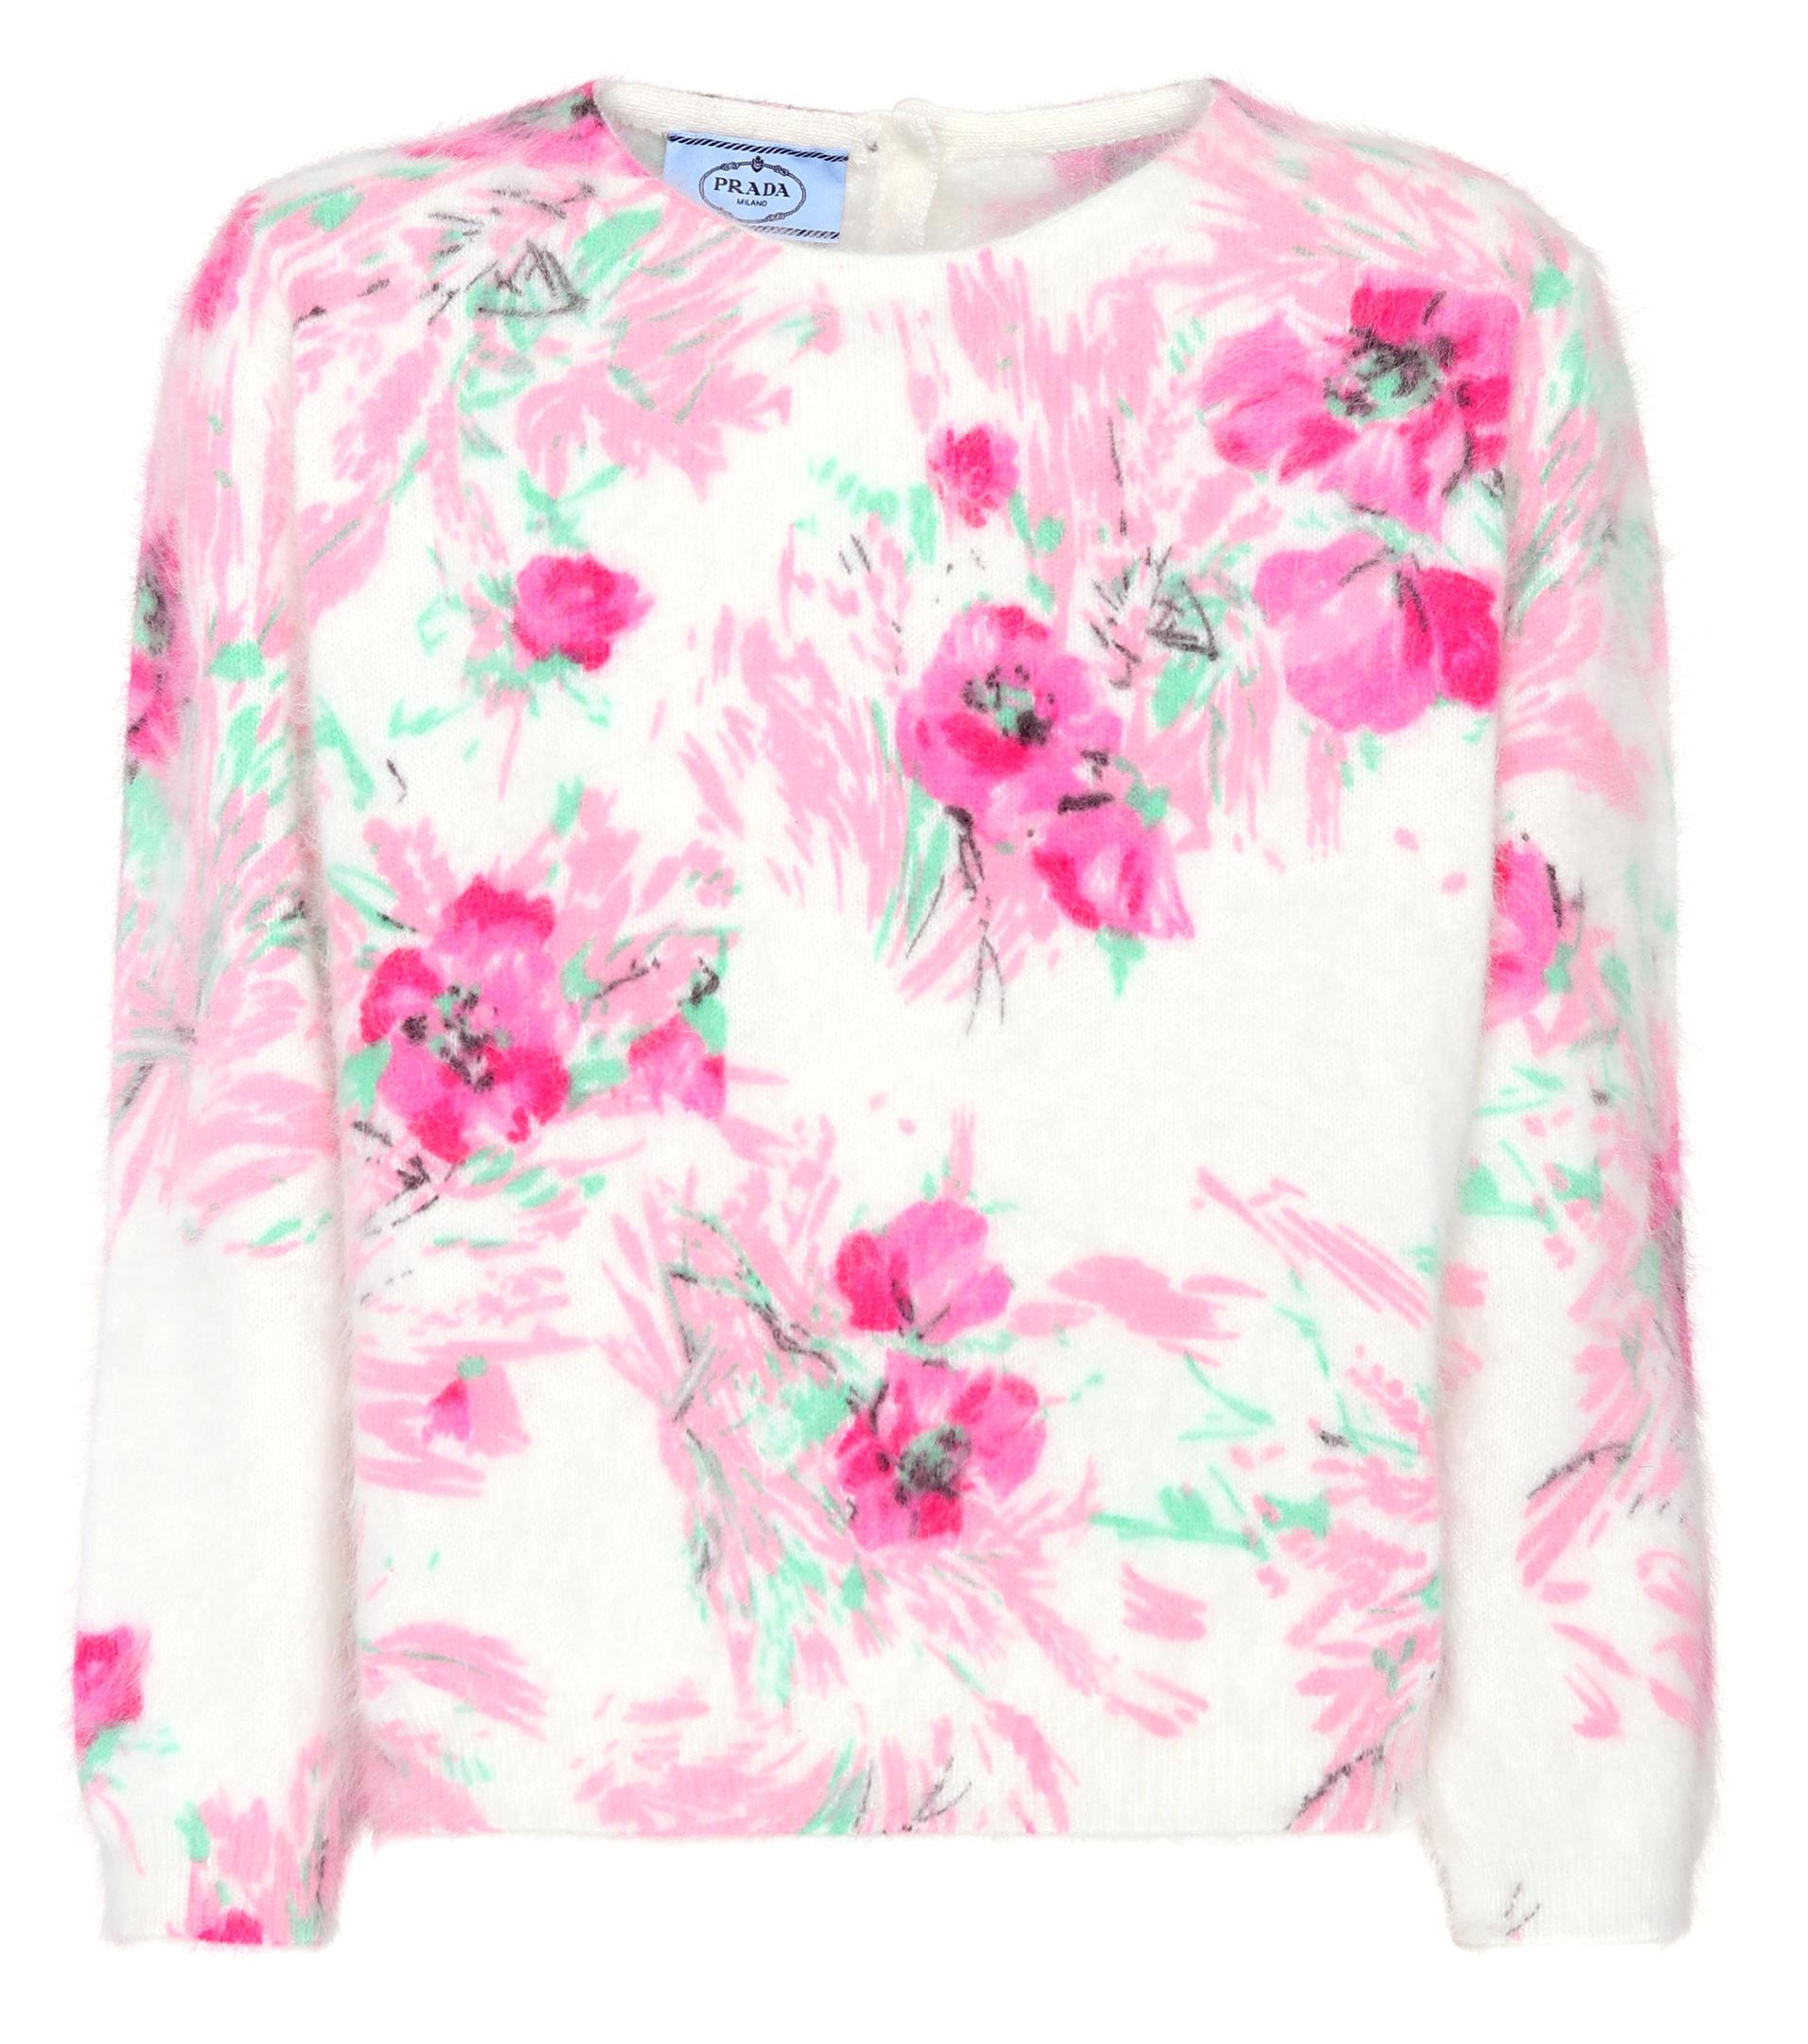 Lyst - Prada Floral Angora Sweater in White